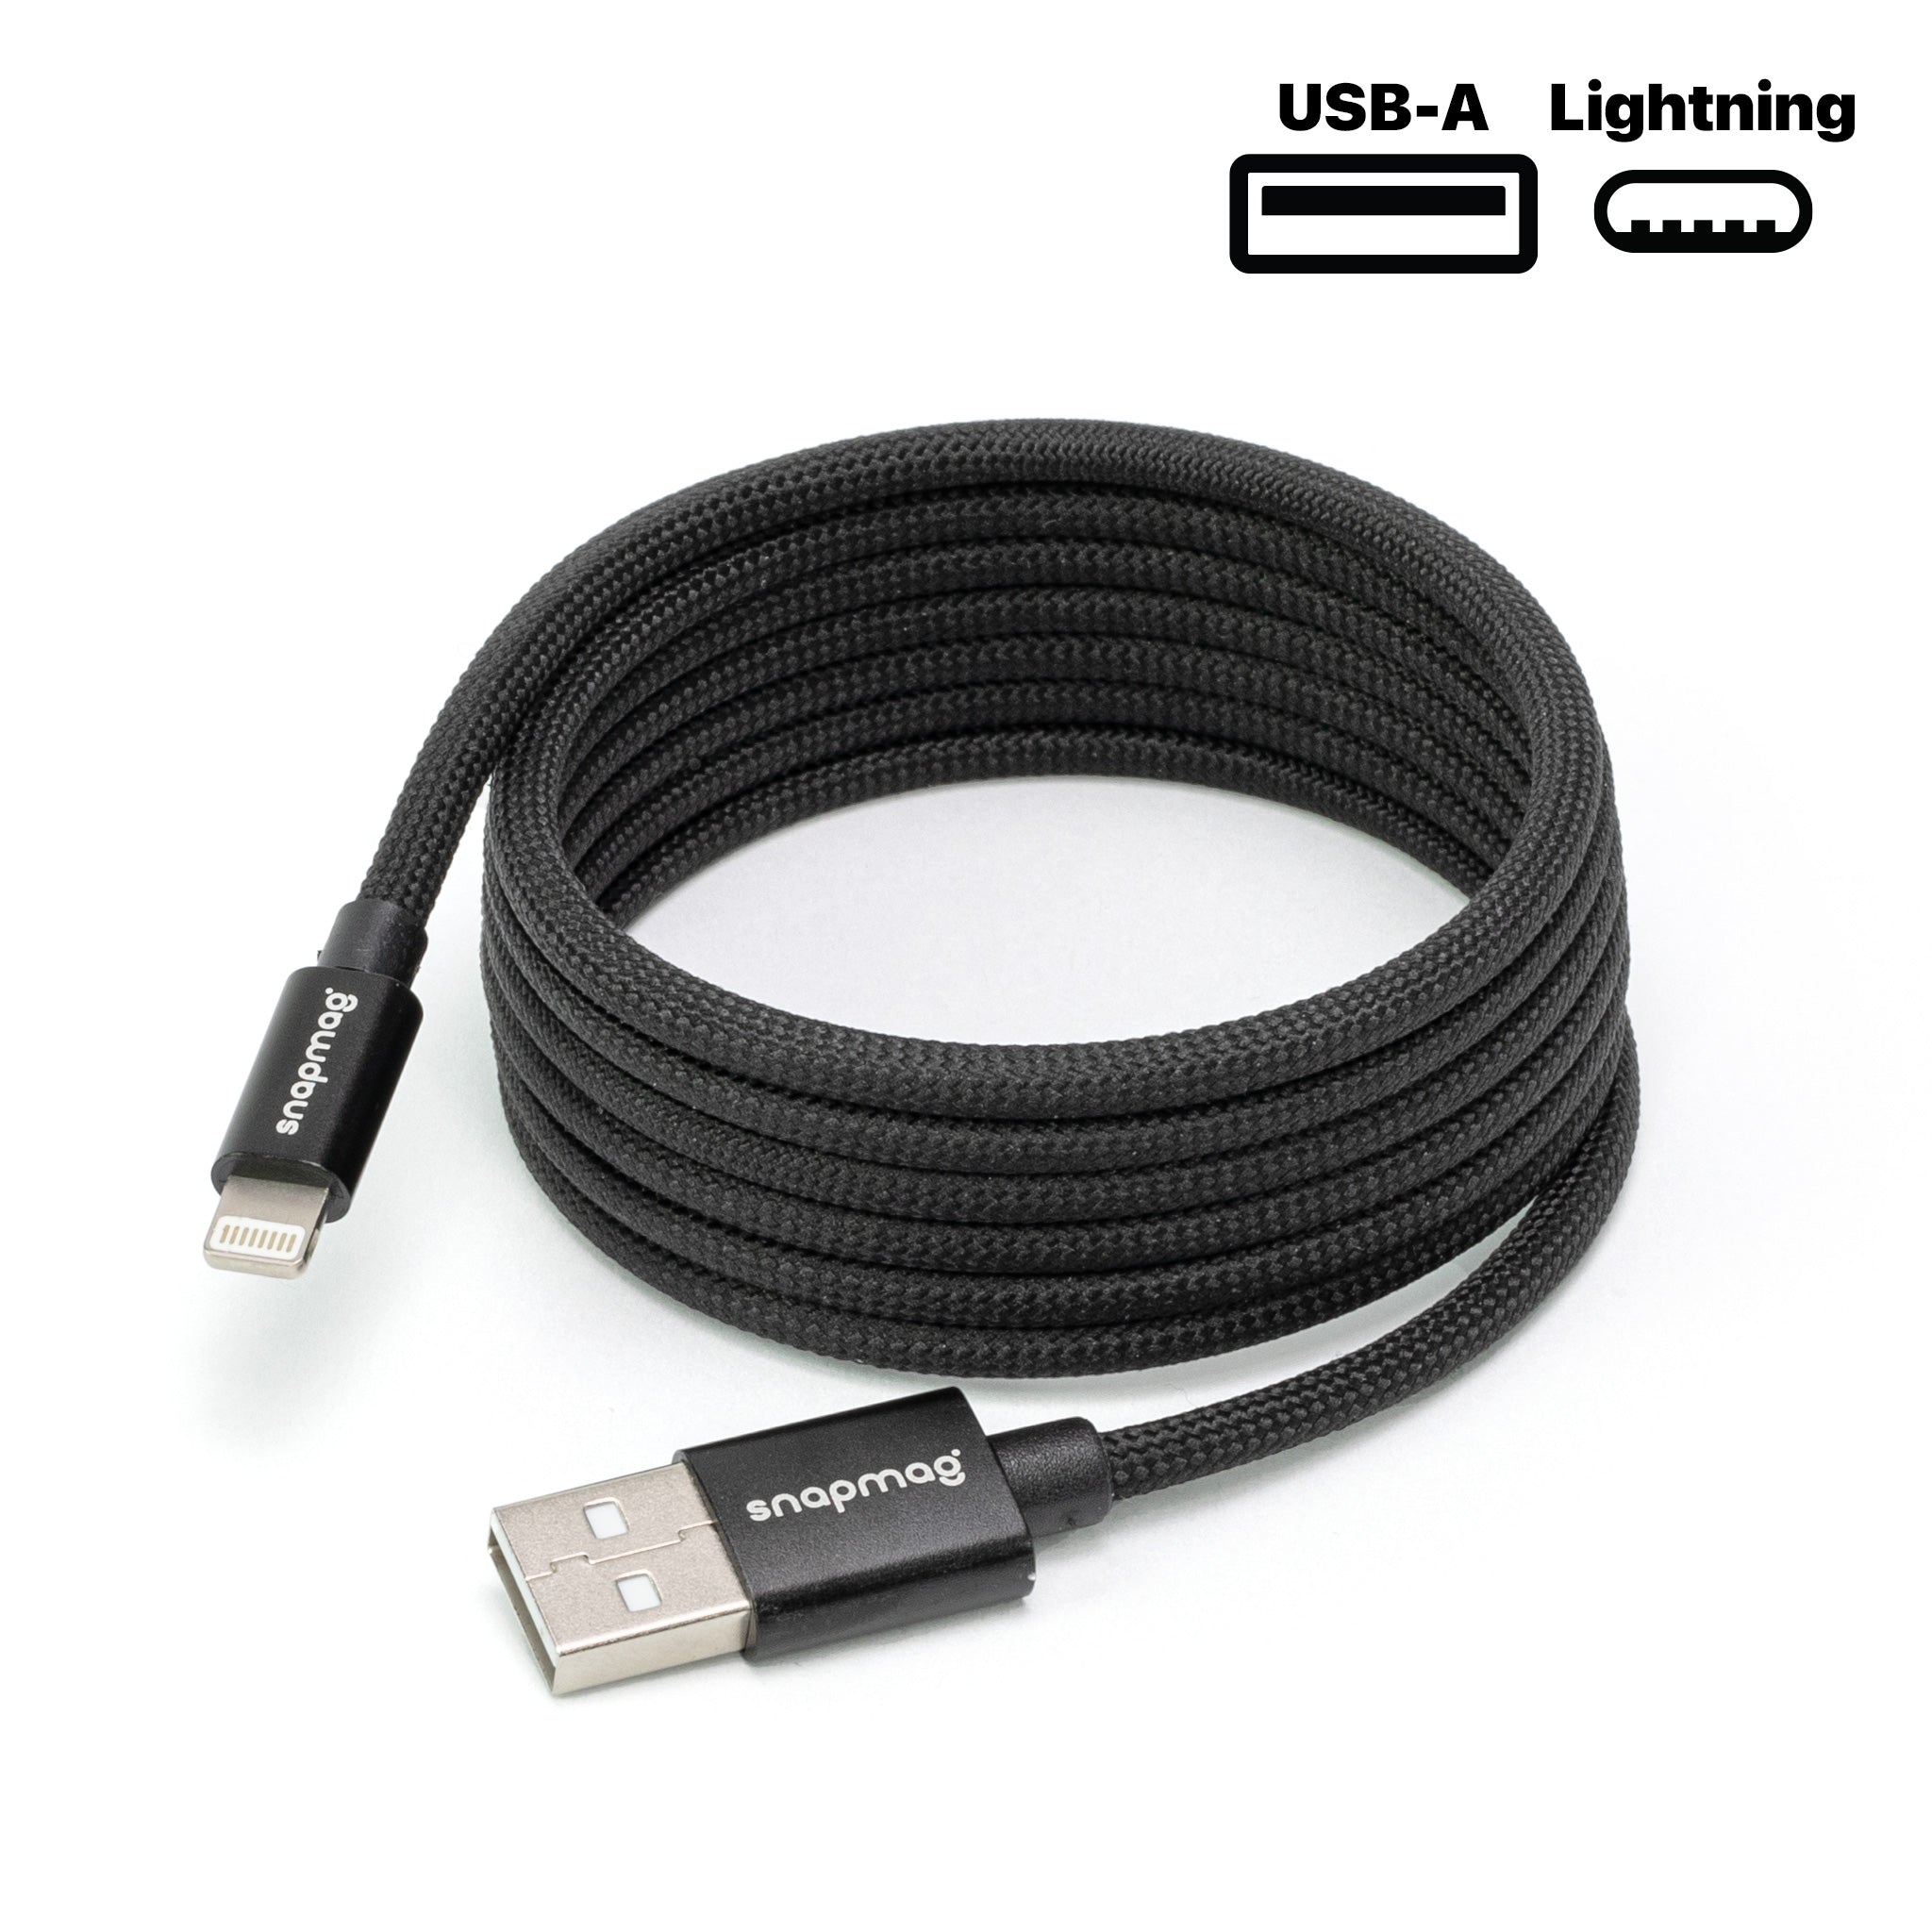 USB-A auf Lightning Kabel | Für alle Apple Lightning-Geräte | 1.5 m | BLACK EDITION